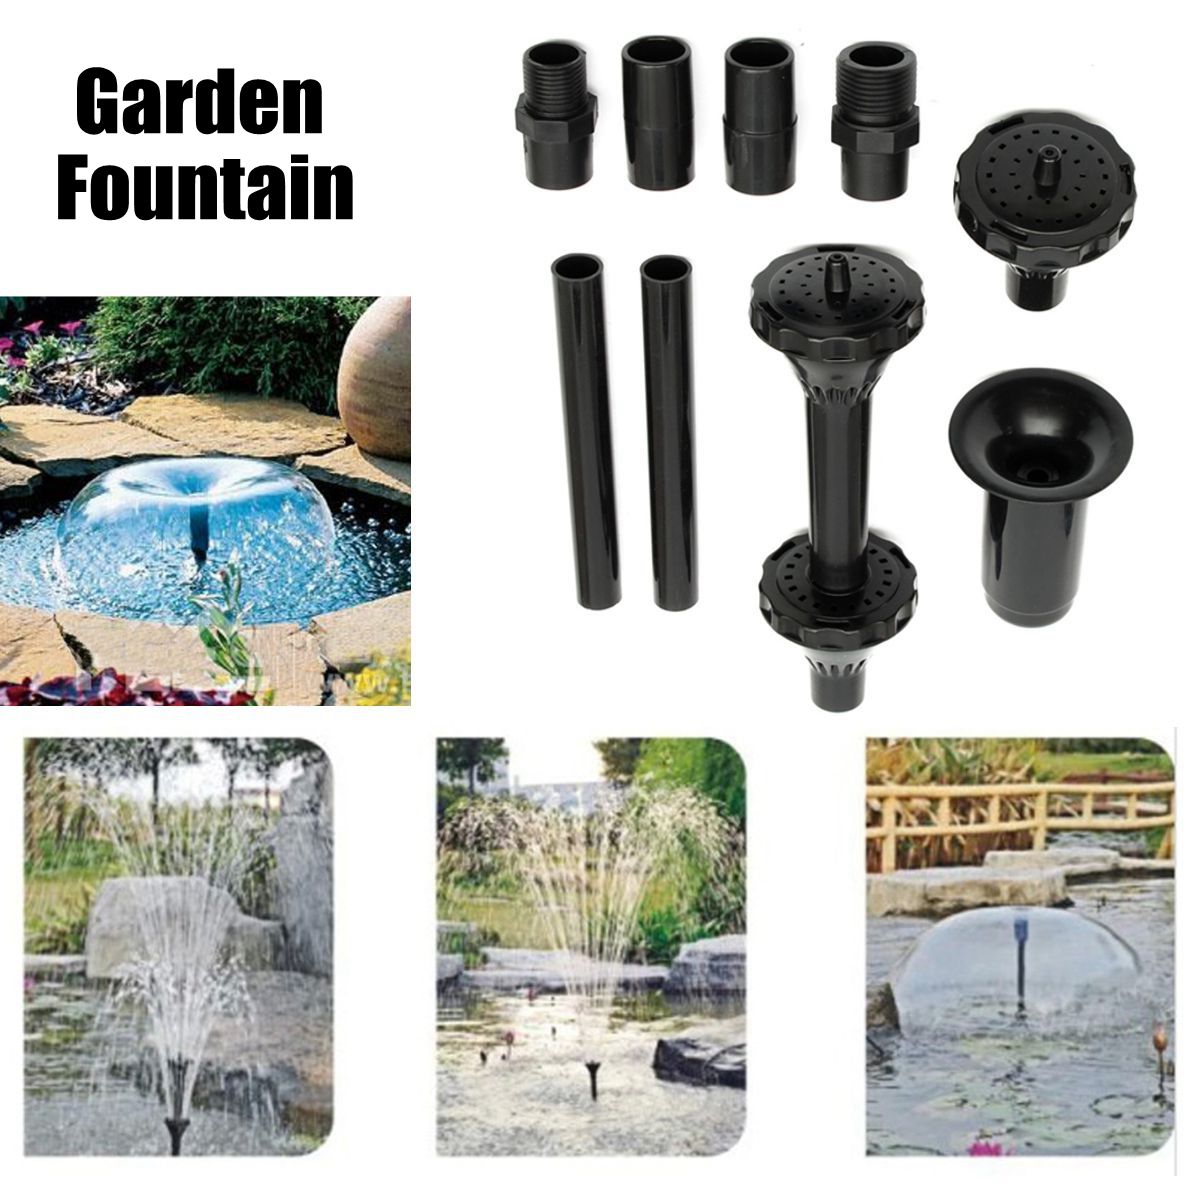 Solar-Powered-Sprinklers-Sprayer-Heads-Water-Pump-Garden-Fountain-Pond-Kit-for-Waterfalls-Display-1164975